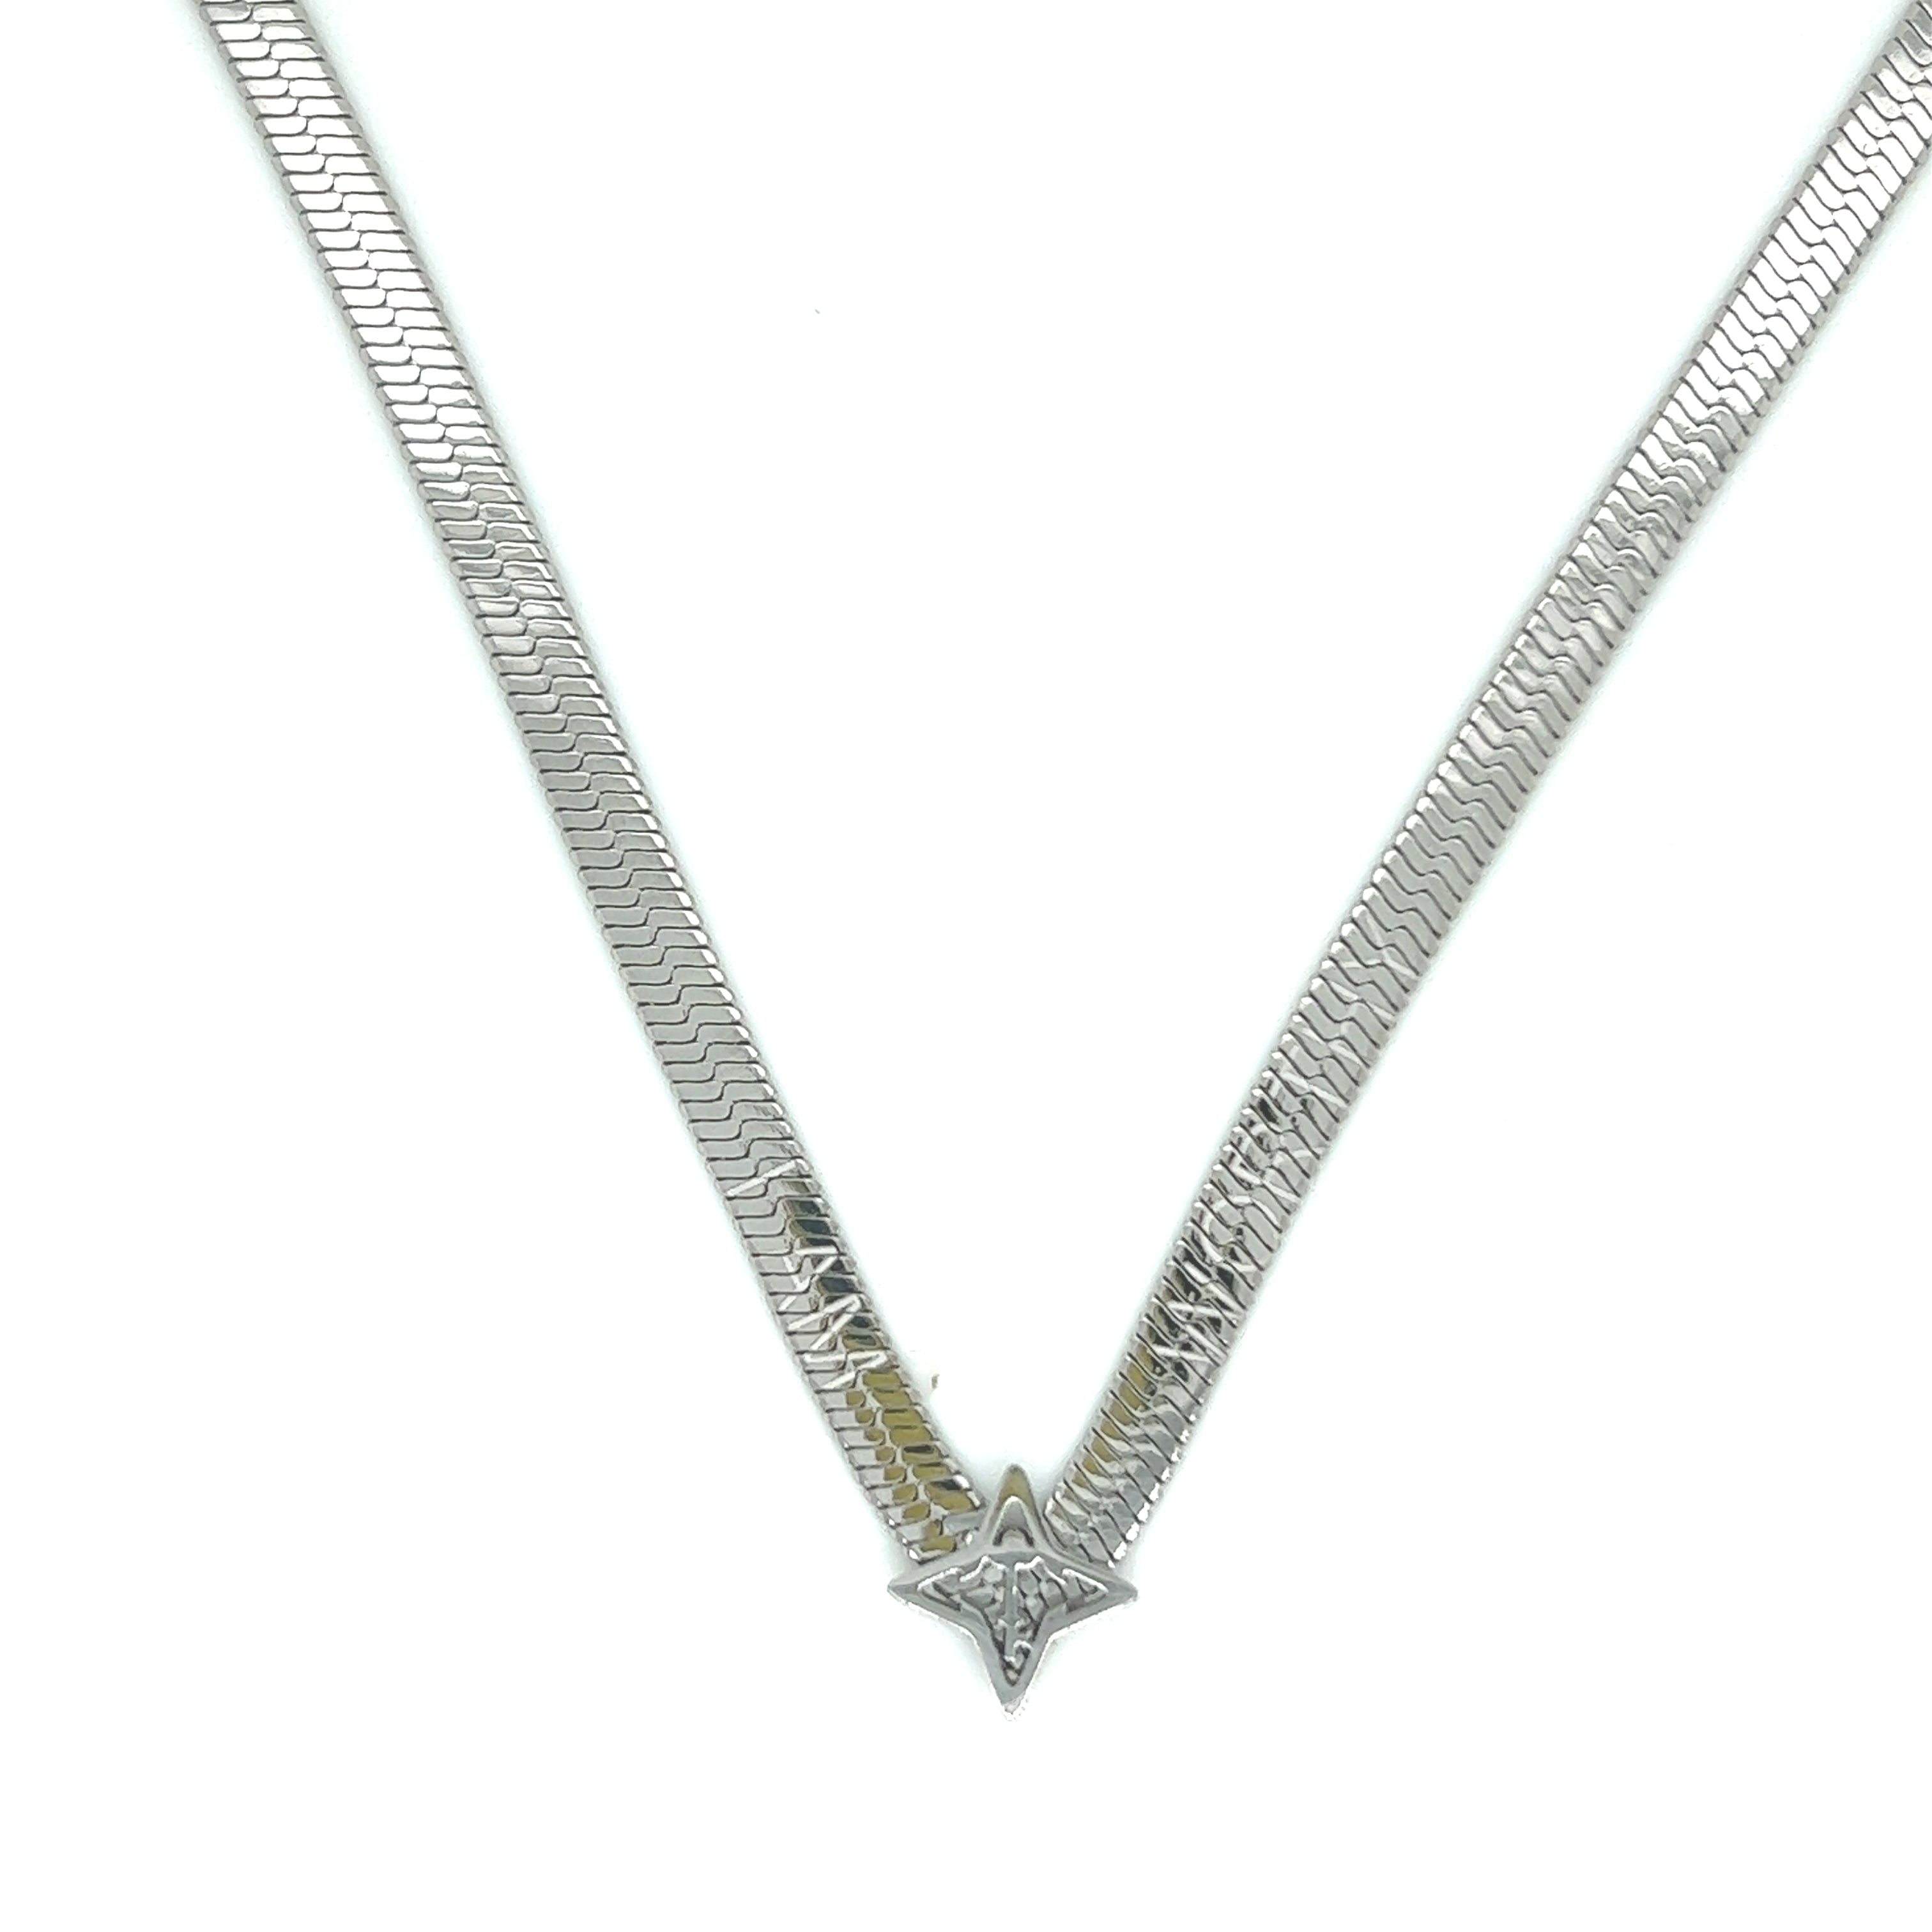 Toned Beautiful Vintage Herringbone Lirm Sterling Silver Necklace 925 17”  29 G | eBay